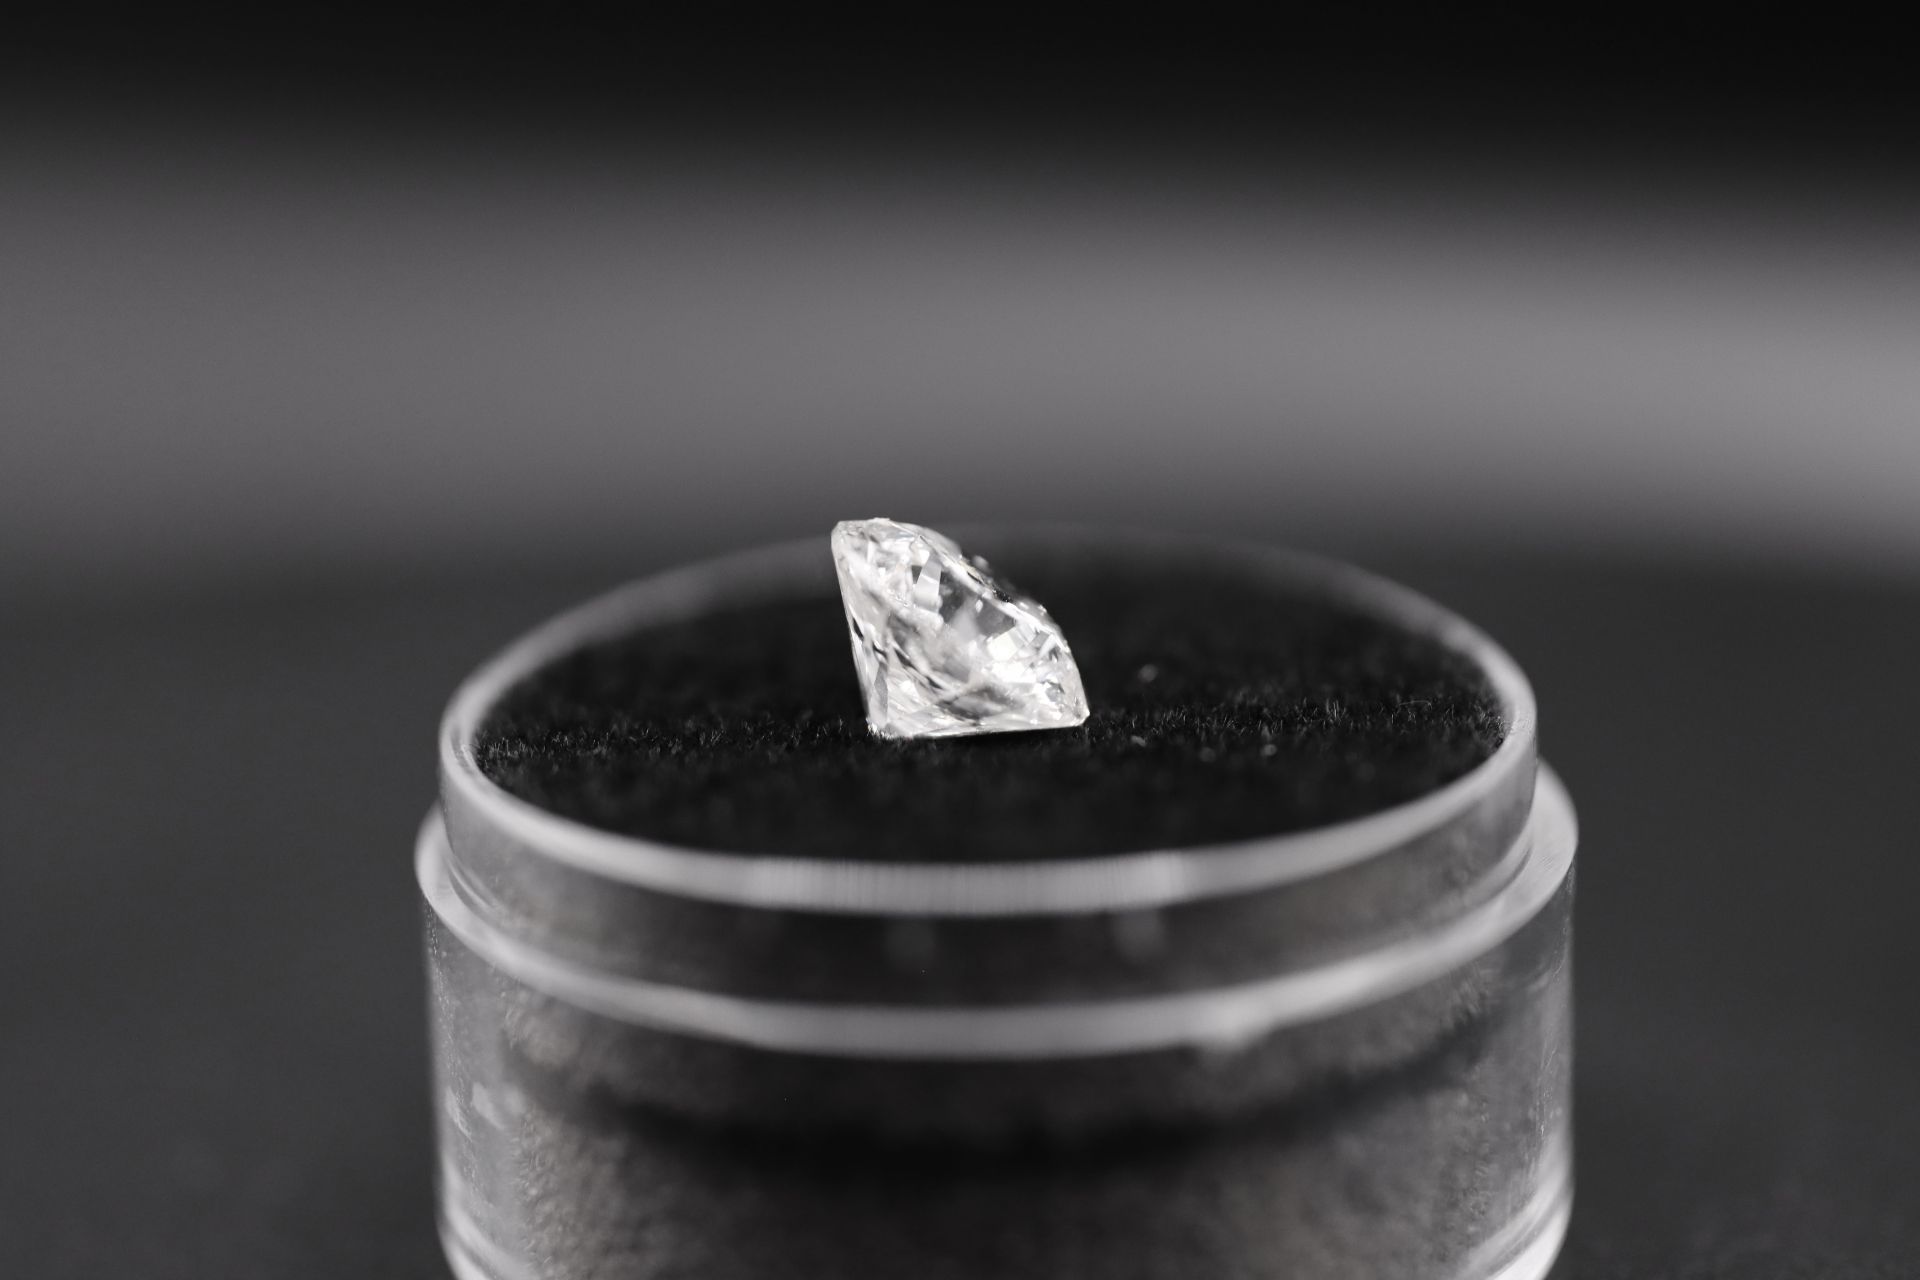 Round Brilliant Cut Natural Diamond 2.01 Carat Colour D Clarity VS1 - DGI Certificate - Image 10 of 24